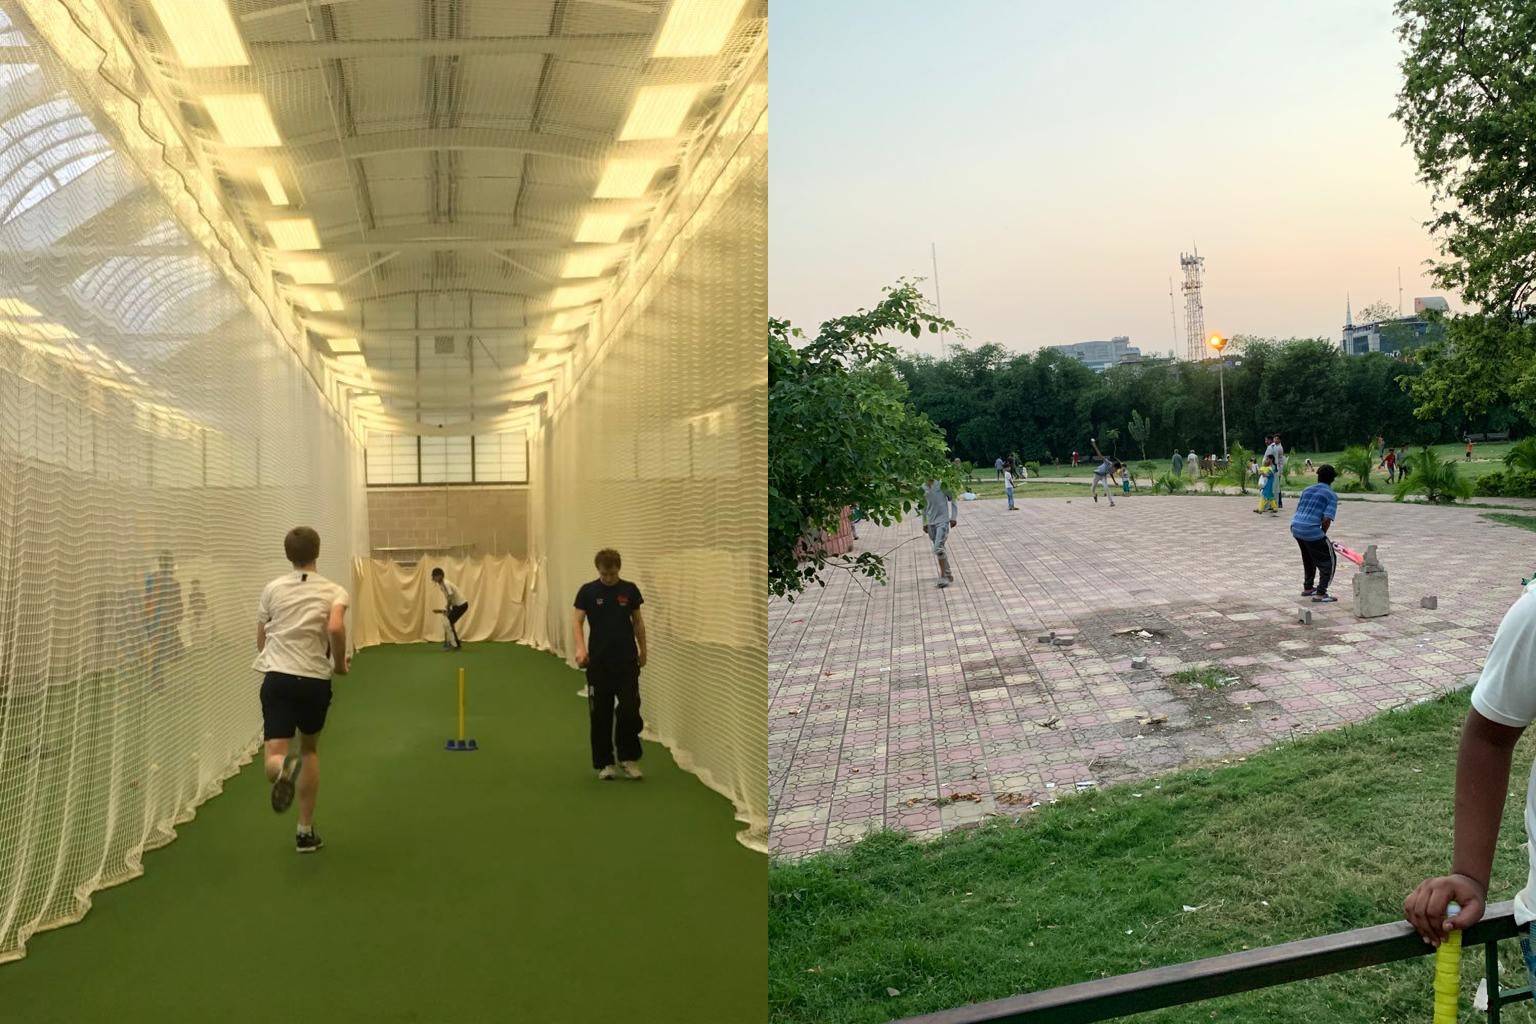 Cricket in Pembroke (Left) vs Islamabad (Right)